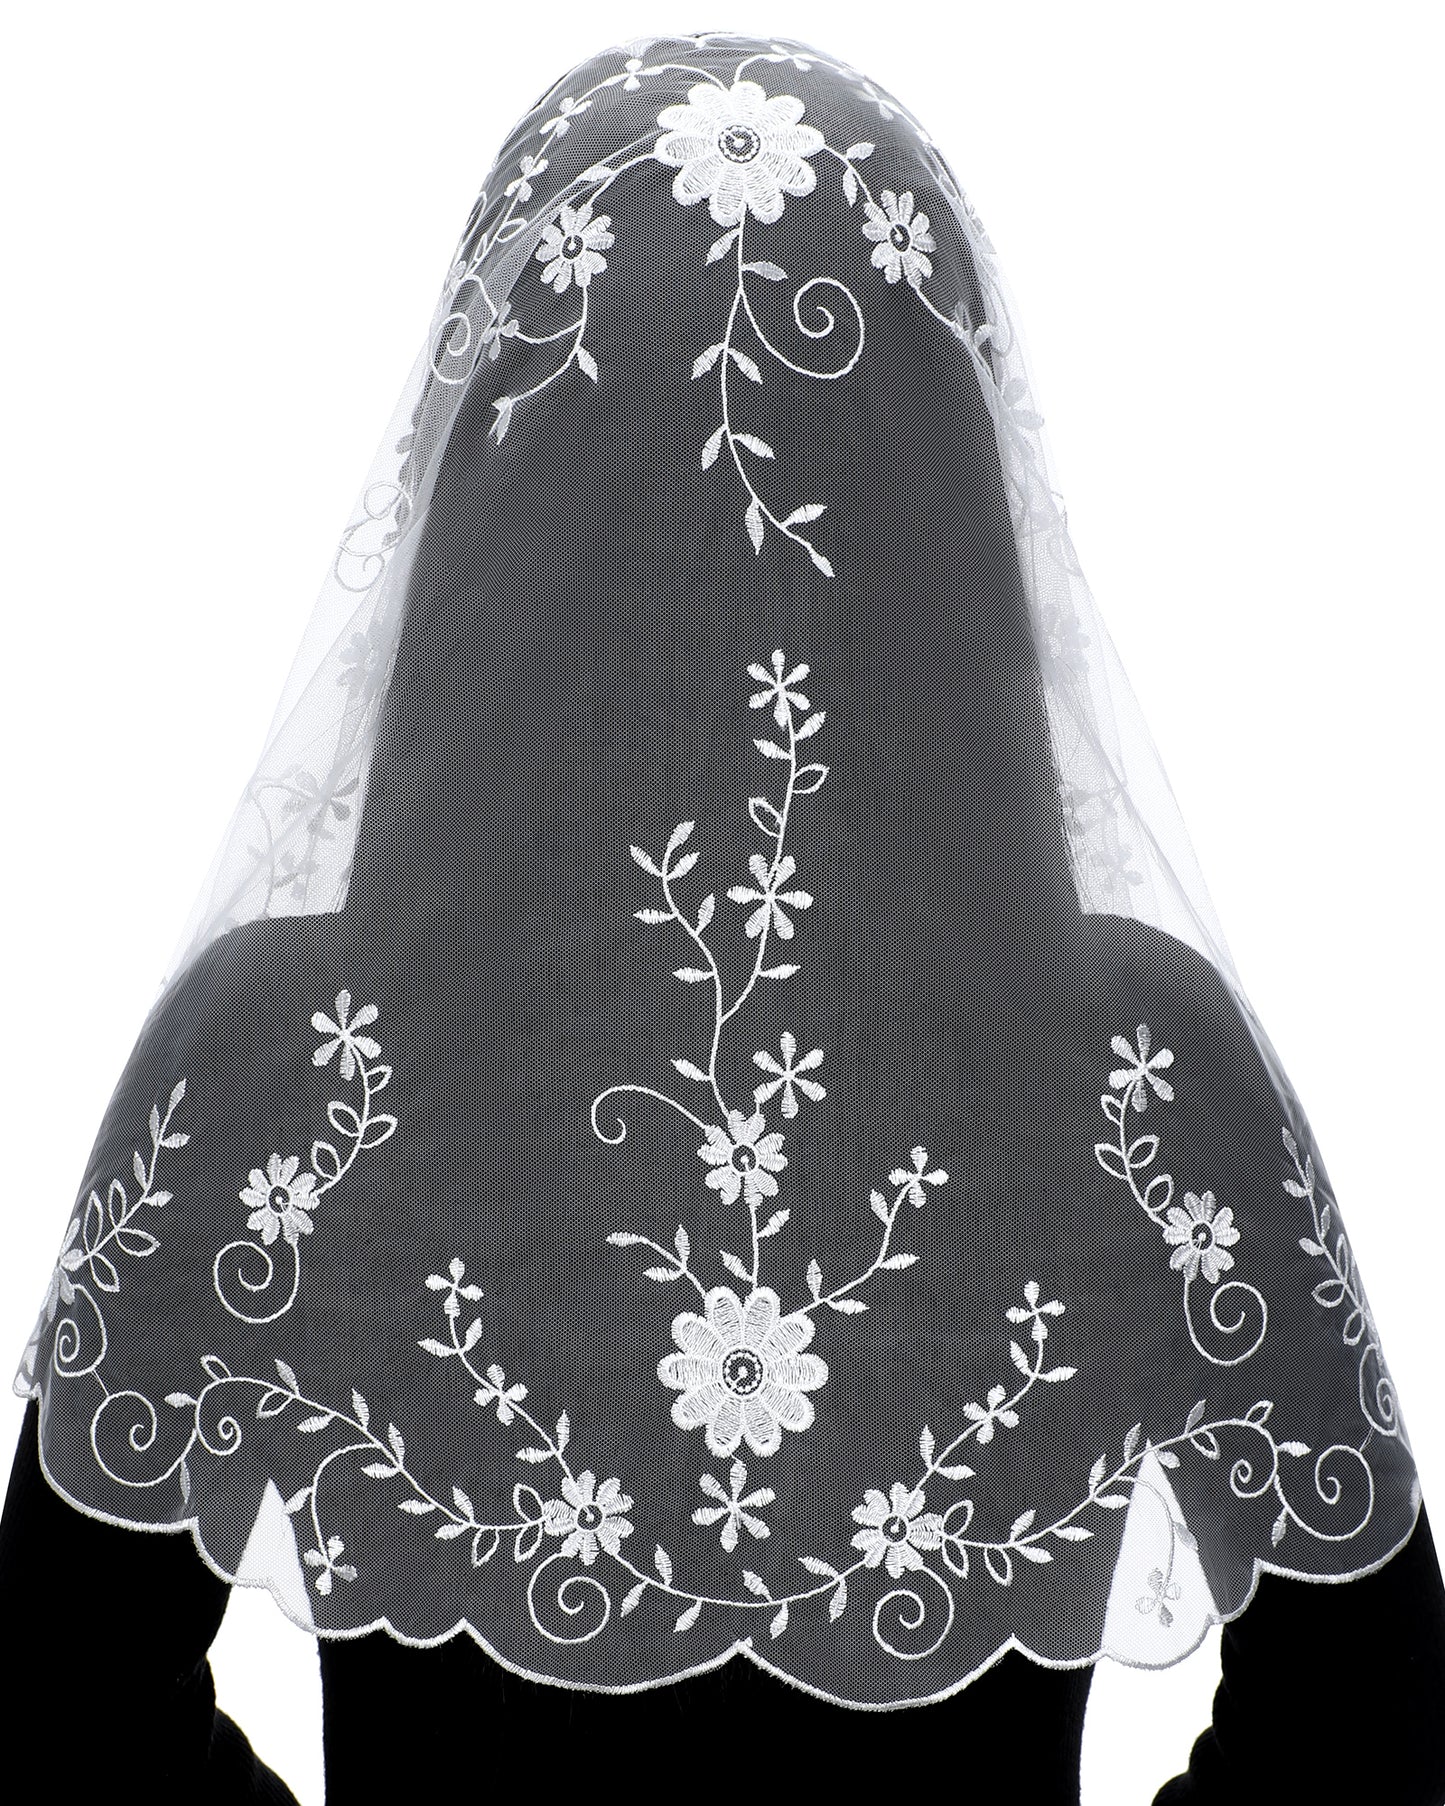 Bozidol Catholic Church Mass Veil Spanish Chapel Lace Mantilla Veil Christian Prayer Scarf Veil with Hair Clips (White)